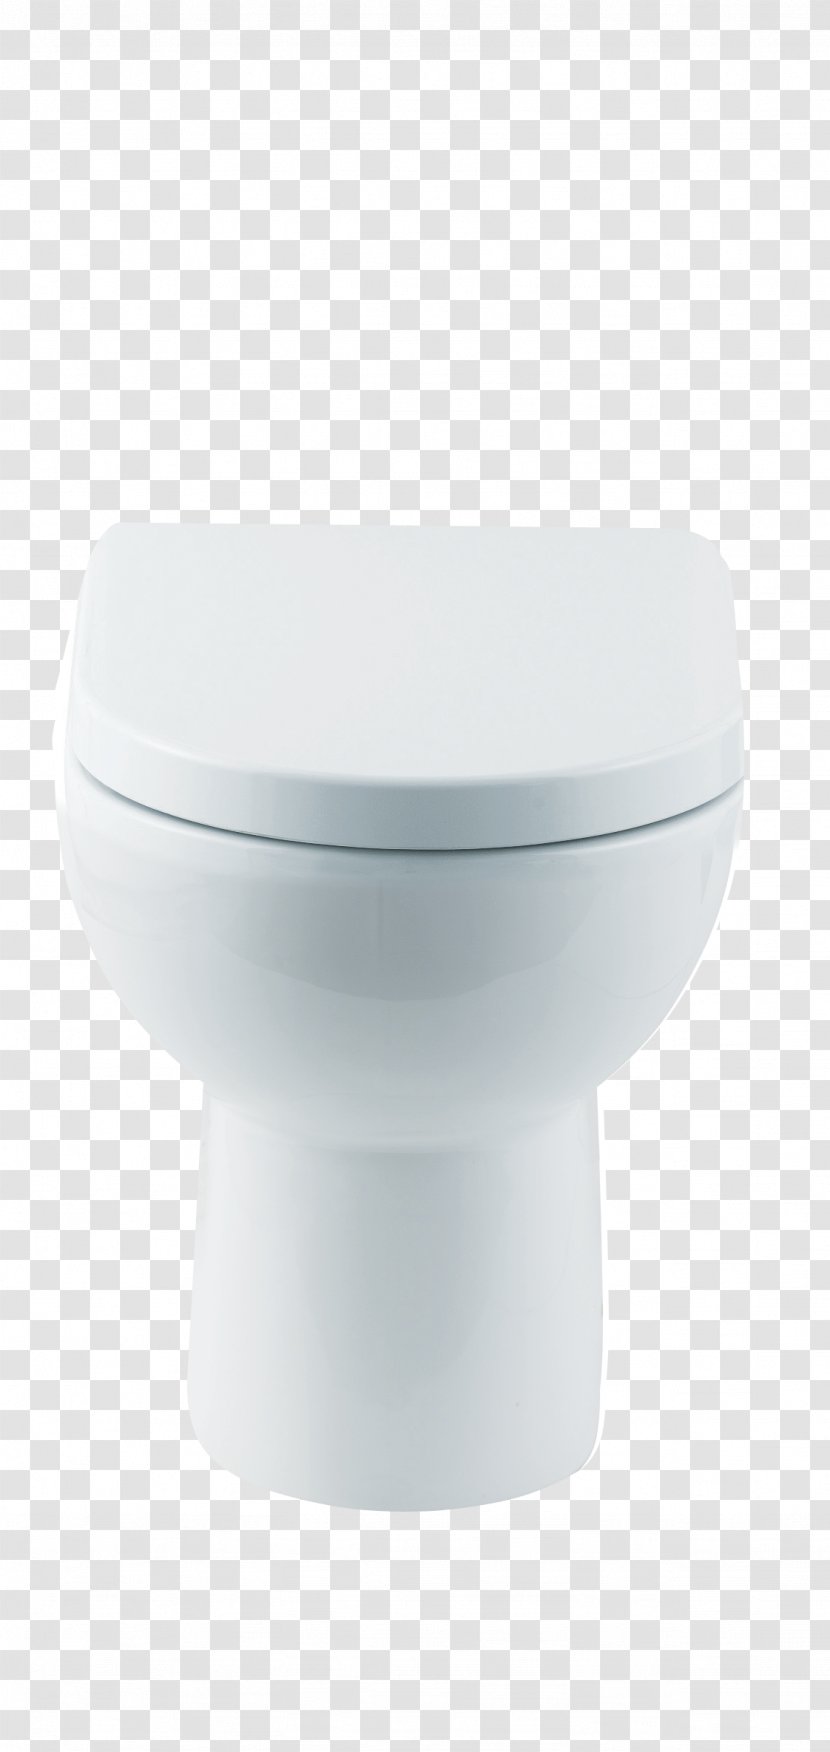 Toilet Seat Tap Bathroom Sink Transparent PNG